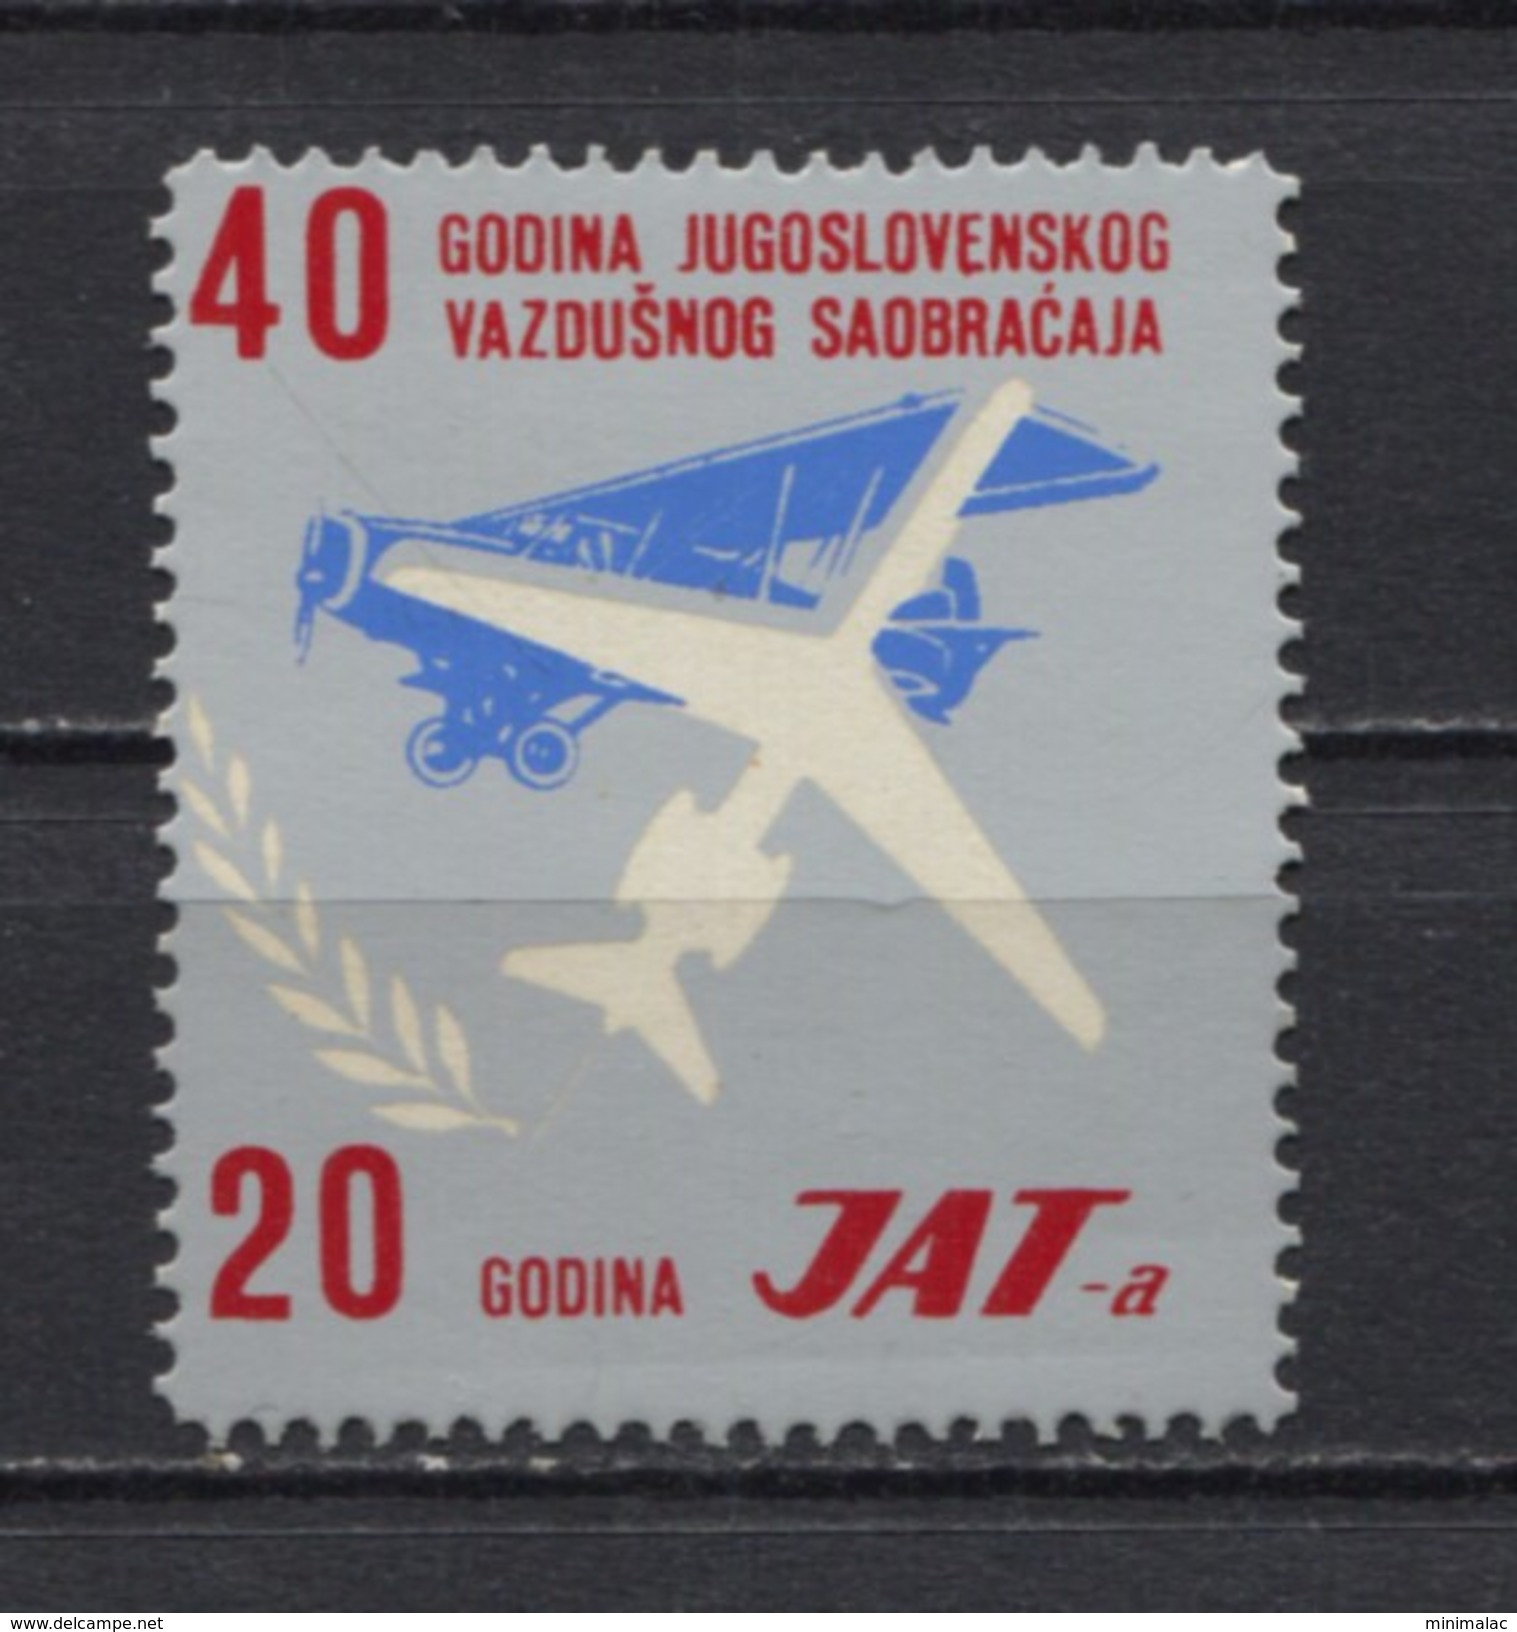 Yugoslavia 1967, 40th Anniversary Of Yugoslav Air Traffic, Yugoslav Airlines, JAT, Plane, Cinderella, Additional,  MNH - Aéreo